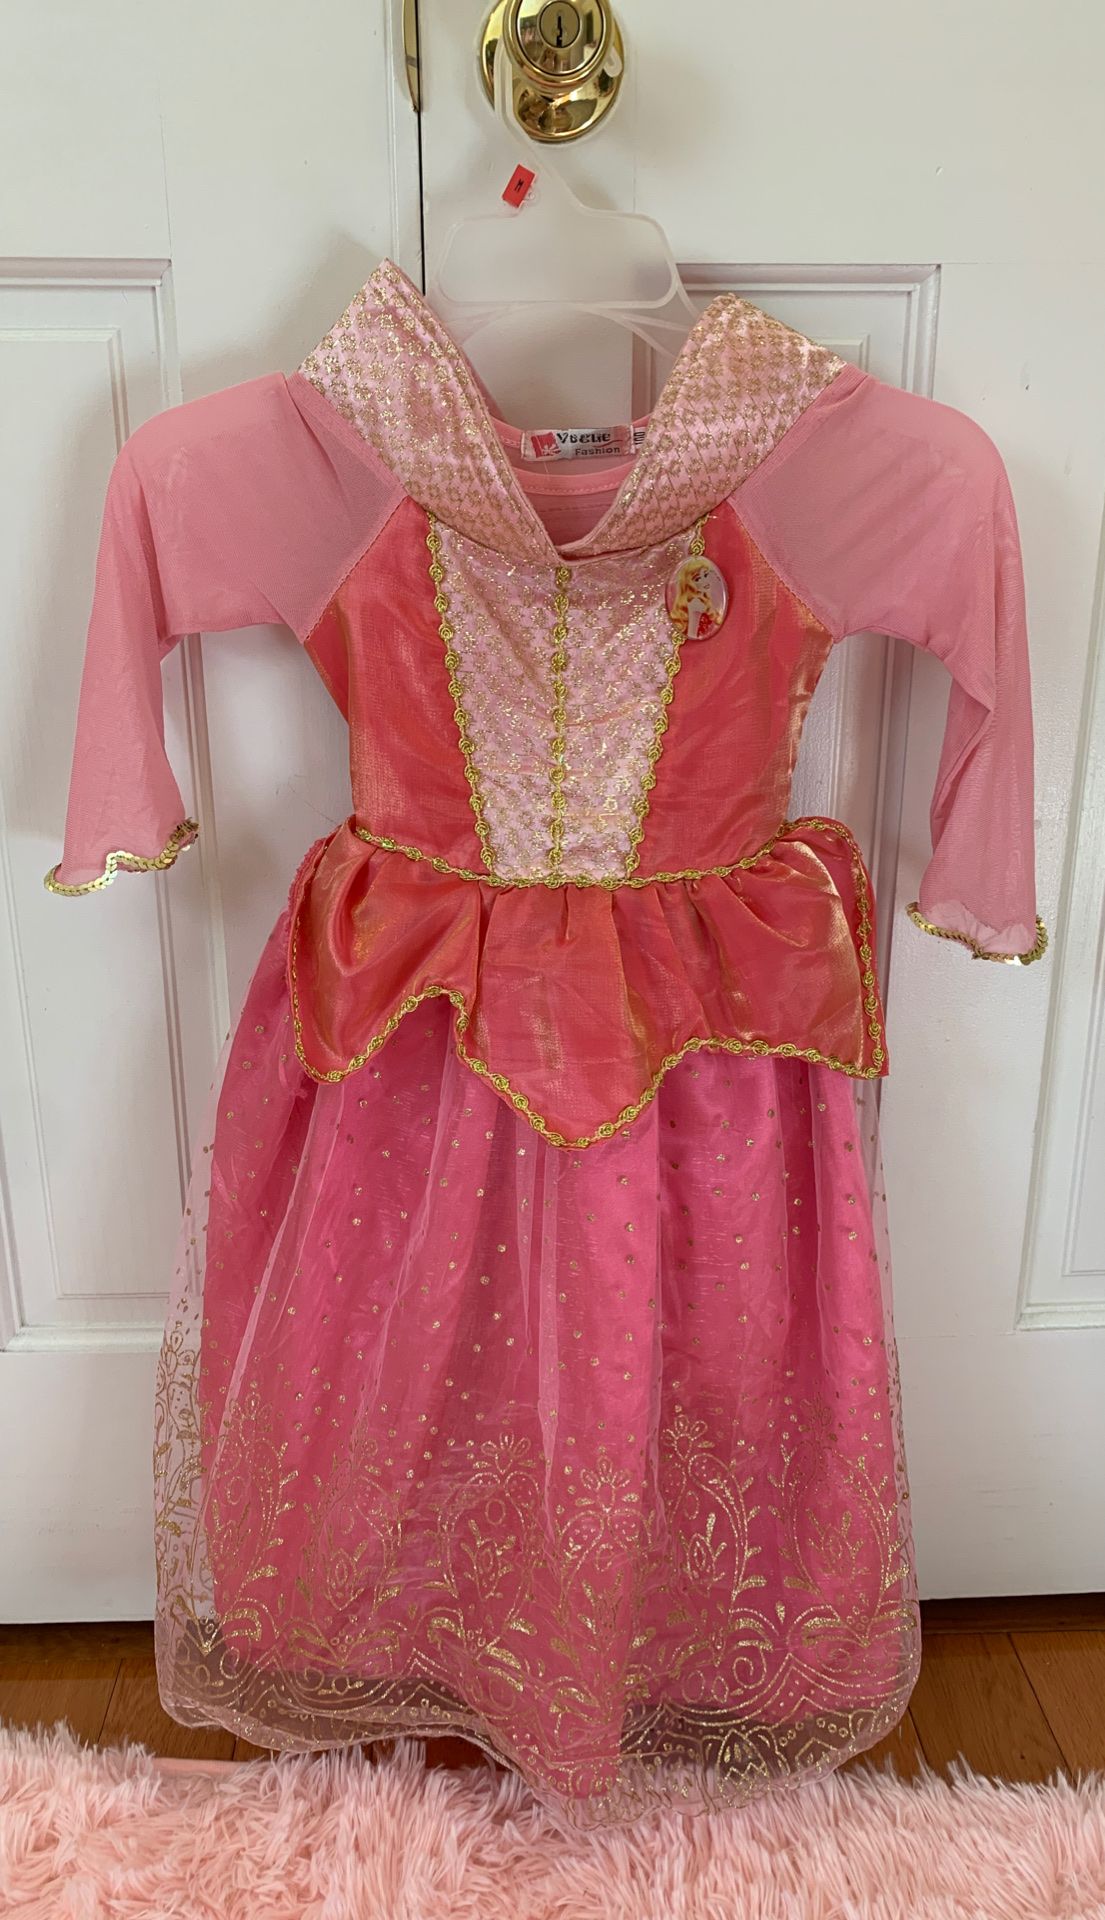 Princess costume for age 2-3